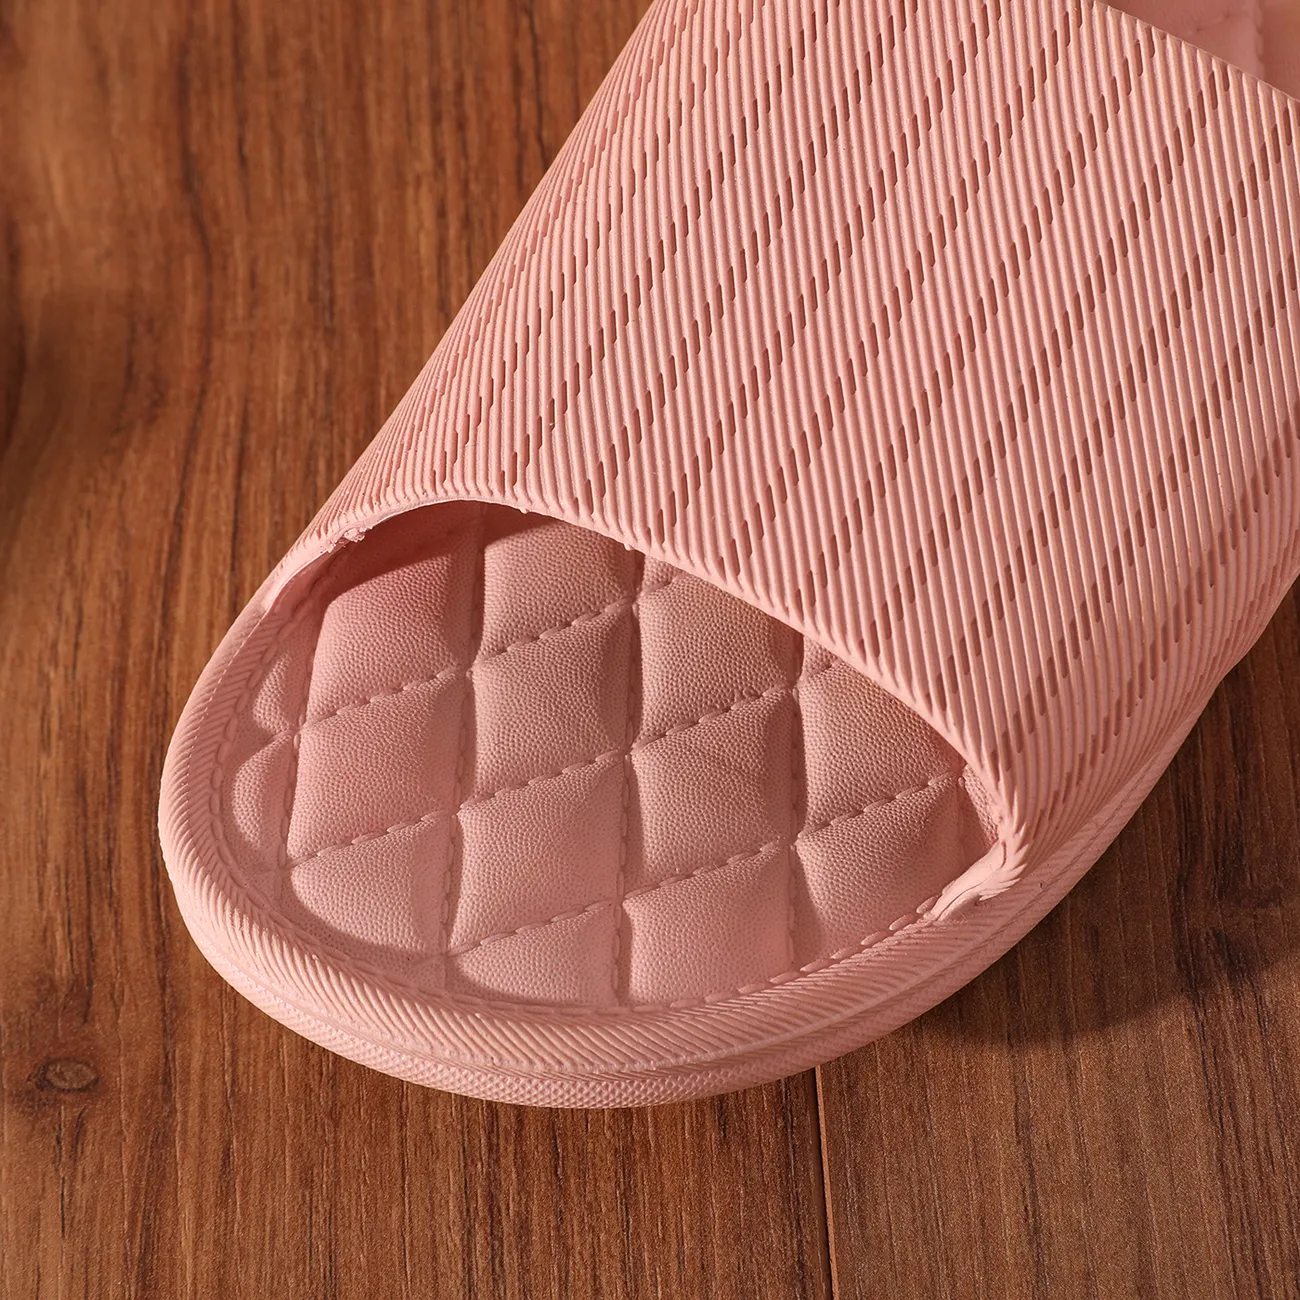 Sommer lässige Männer Pantoffeln Paar rutschfeste Folien Badeschuhe Pool Schuhe weiche Sohle Frauen zu Hause Boden gleitet rosa big image 1